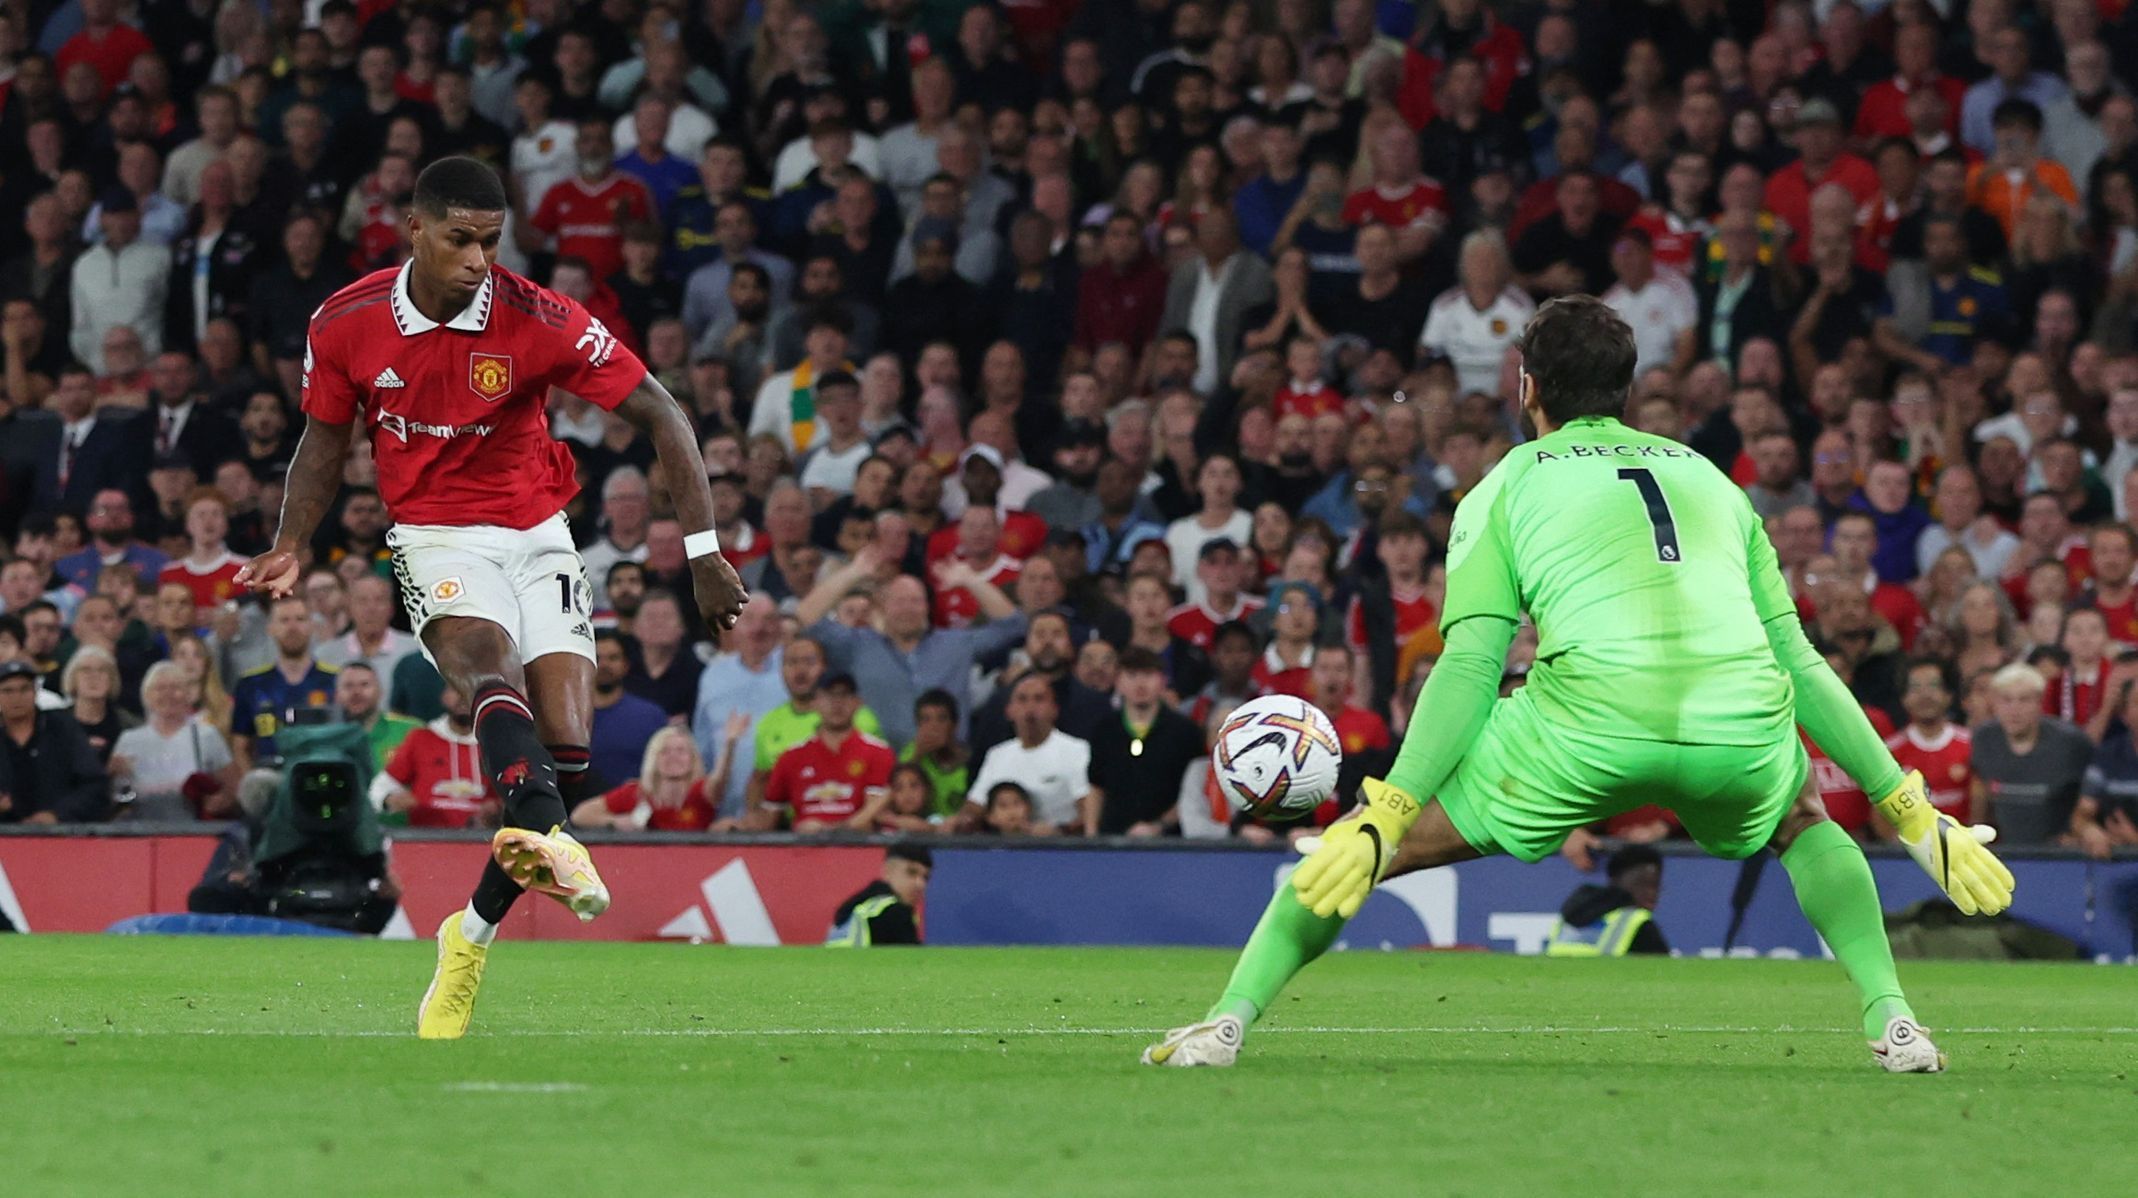 Marcus Rashford z Manchesteru United dává gól v zápase s Liverpoolem